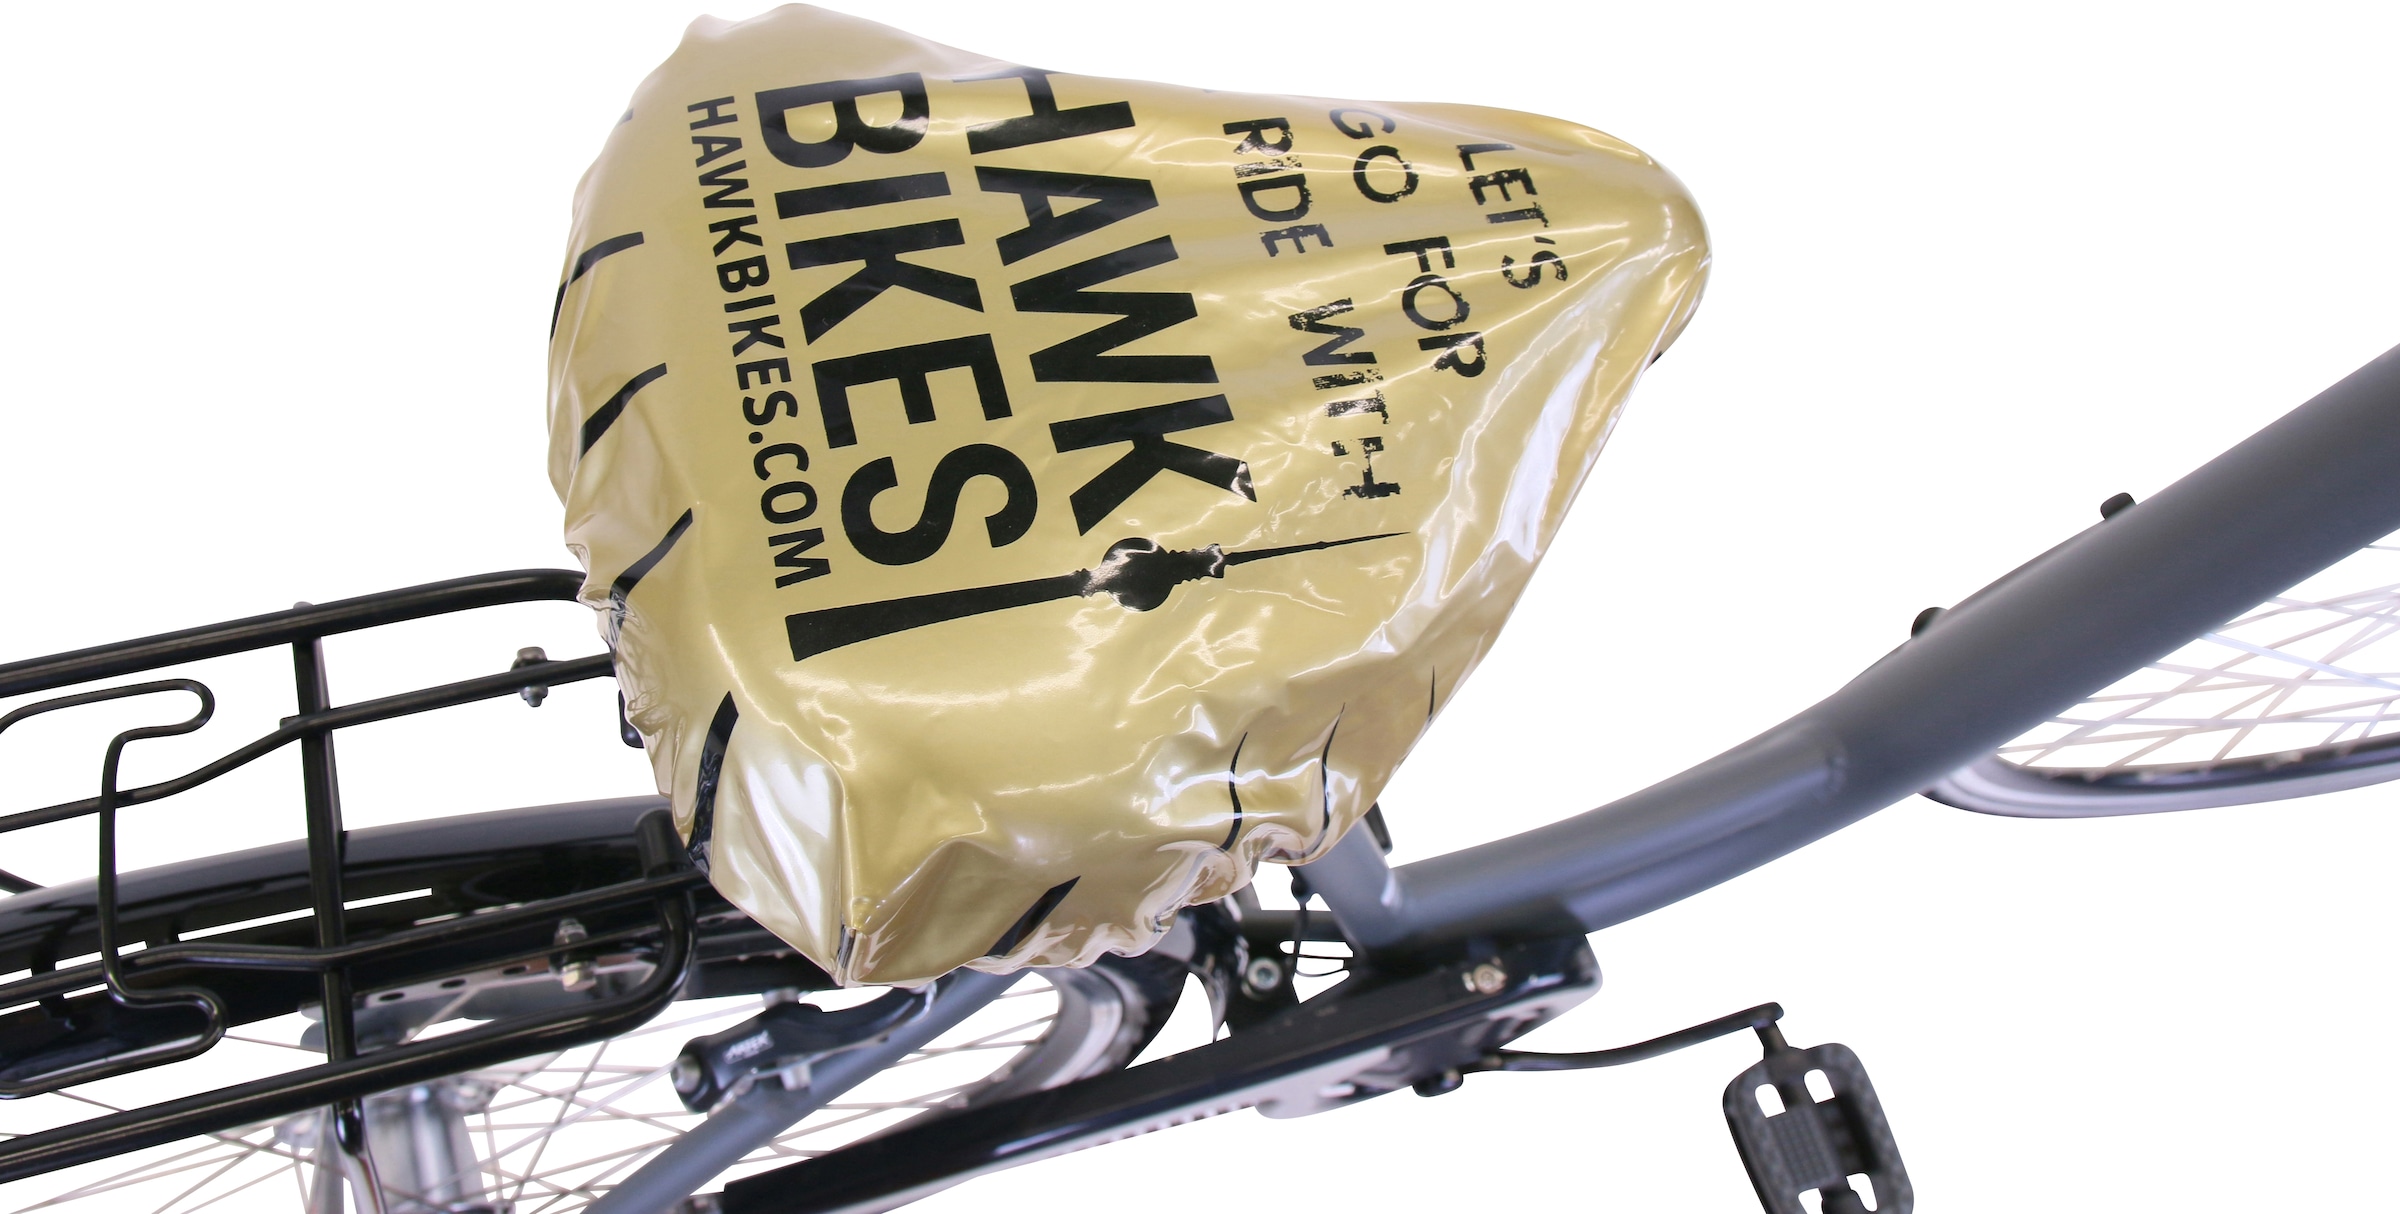 HAWK Bikes Cityrad »HAWK City Wave Deluxe Plus Grey«, 7 Gang, Shimano, Nexus Schaltwerk